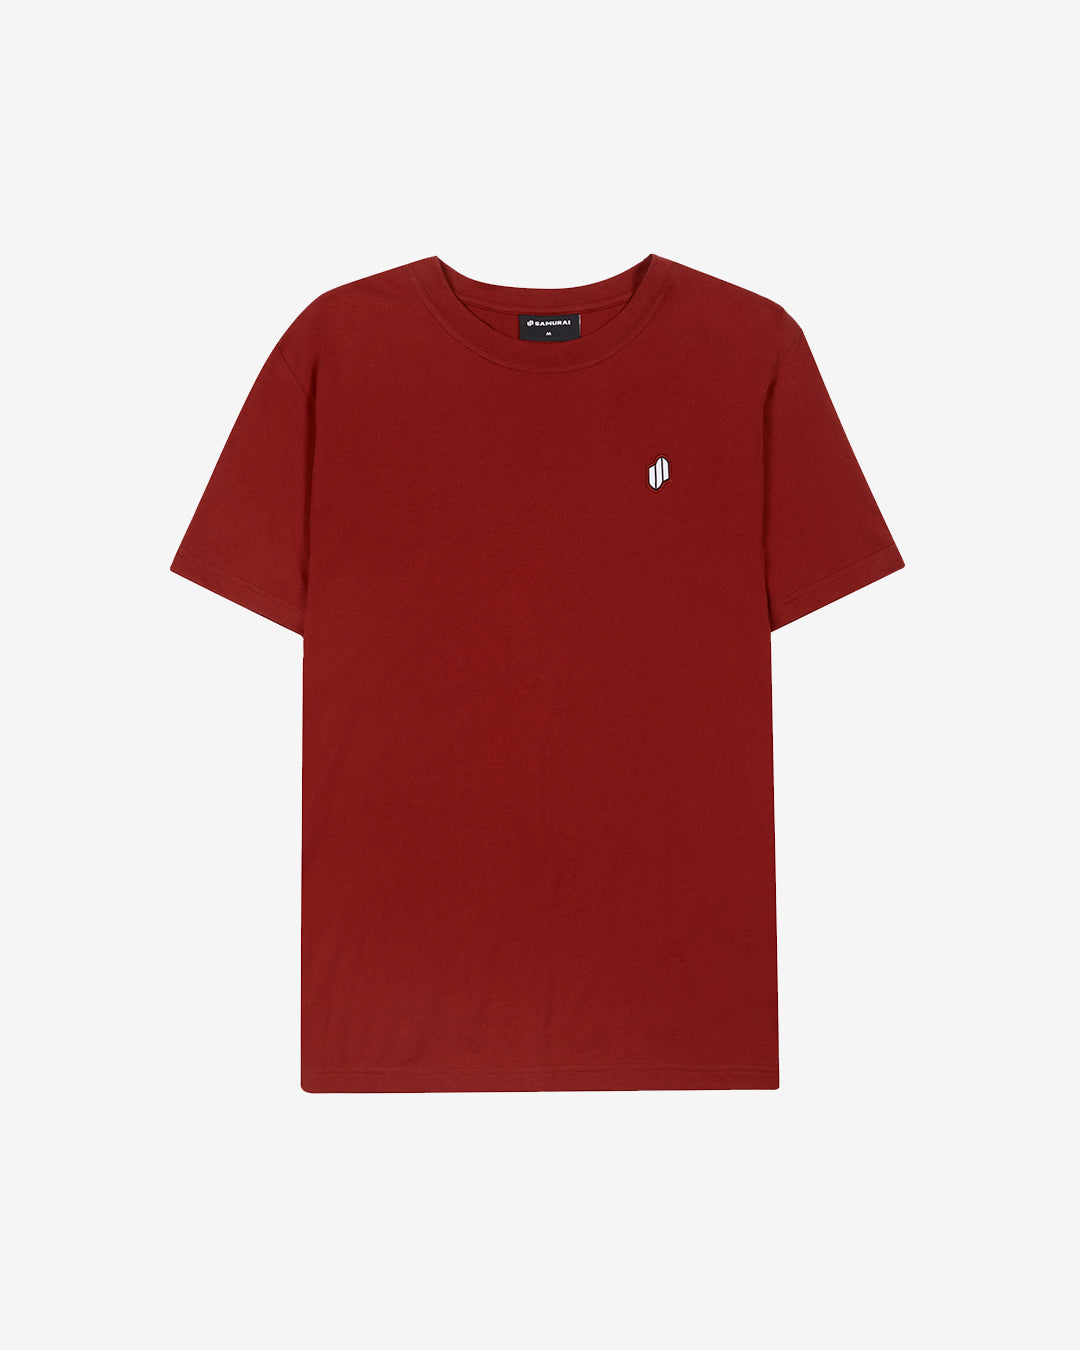 PFC: 002-1 - Men's T-Shirt - Maroon